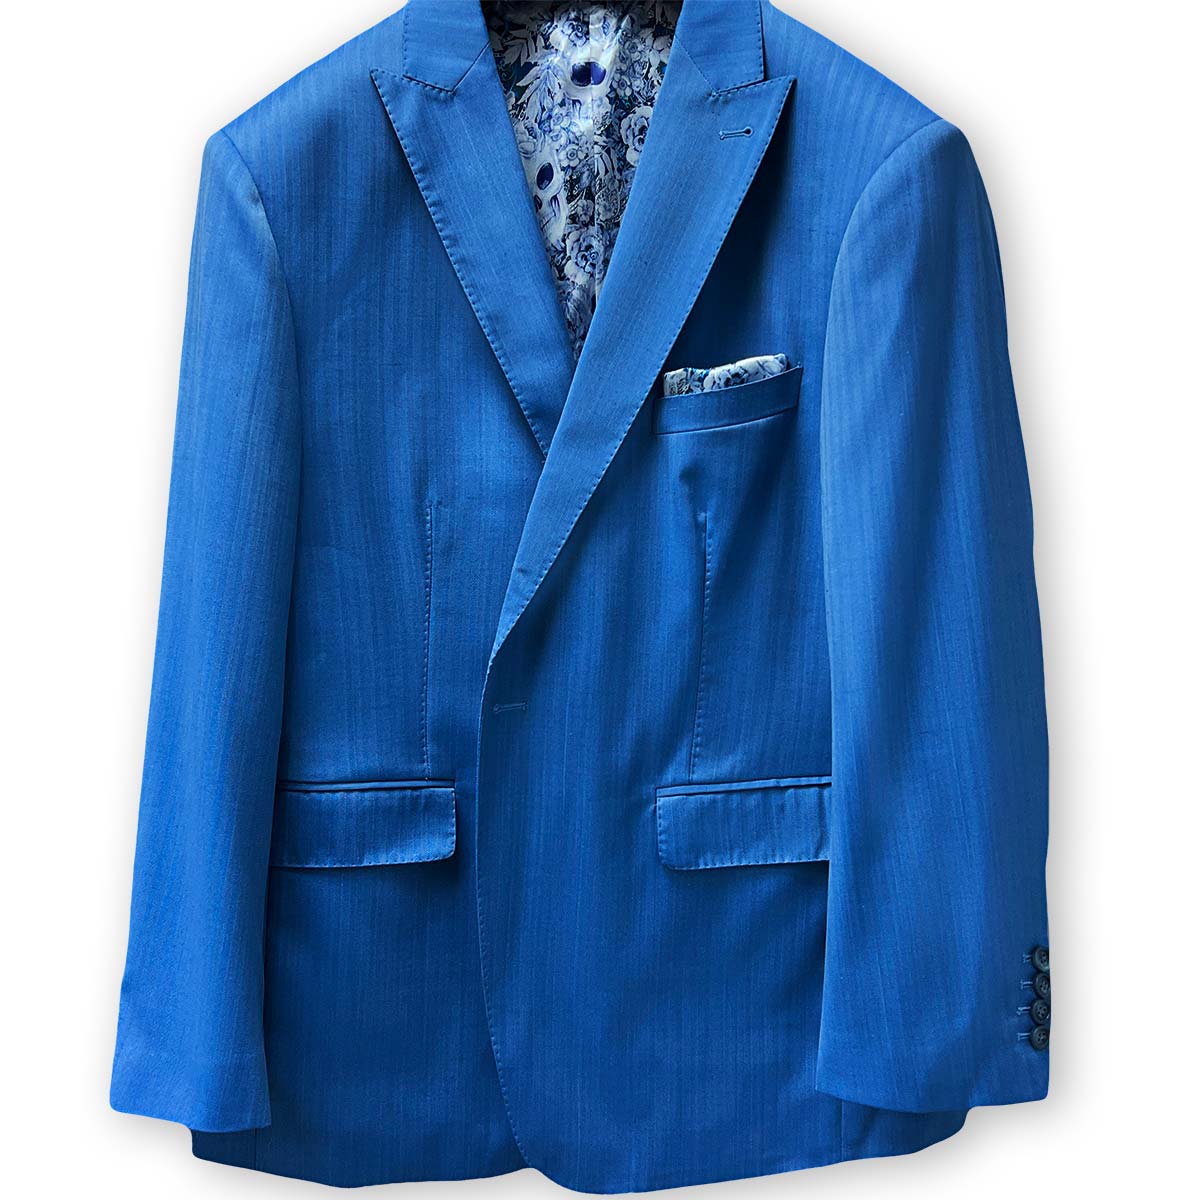 Men's herringbone suit in blue, made from luxurious 100% Australian Merino wool.